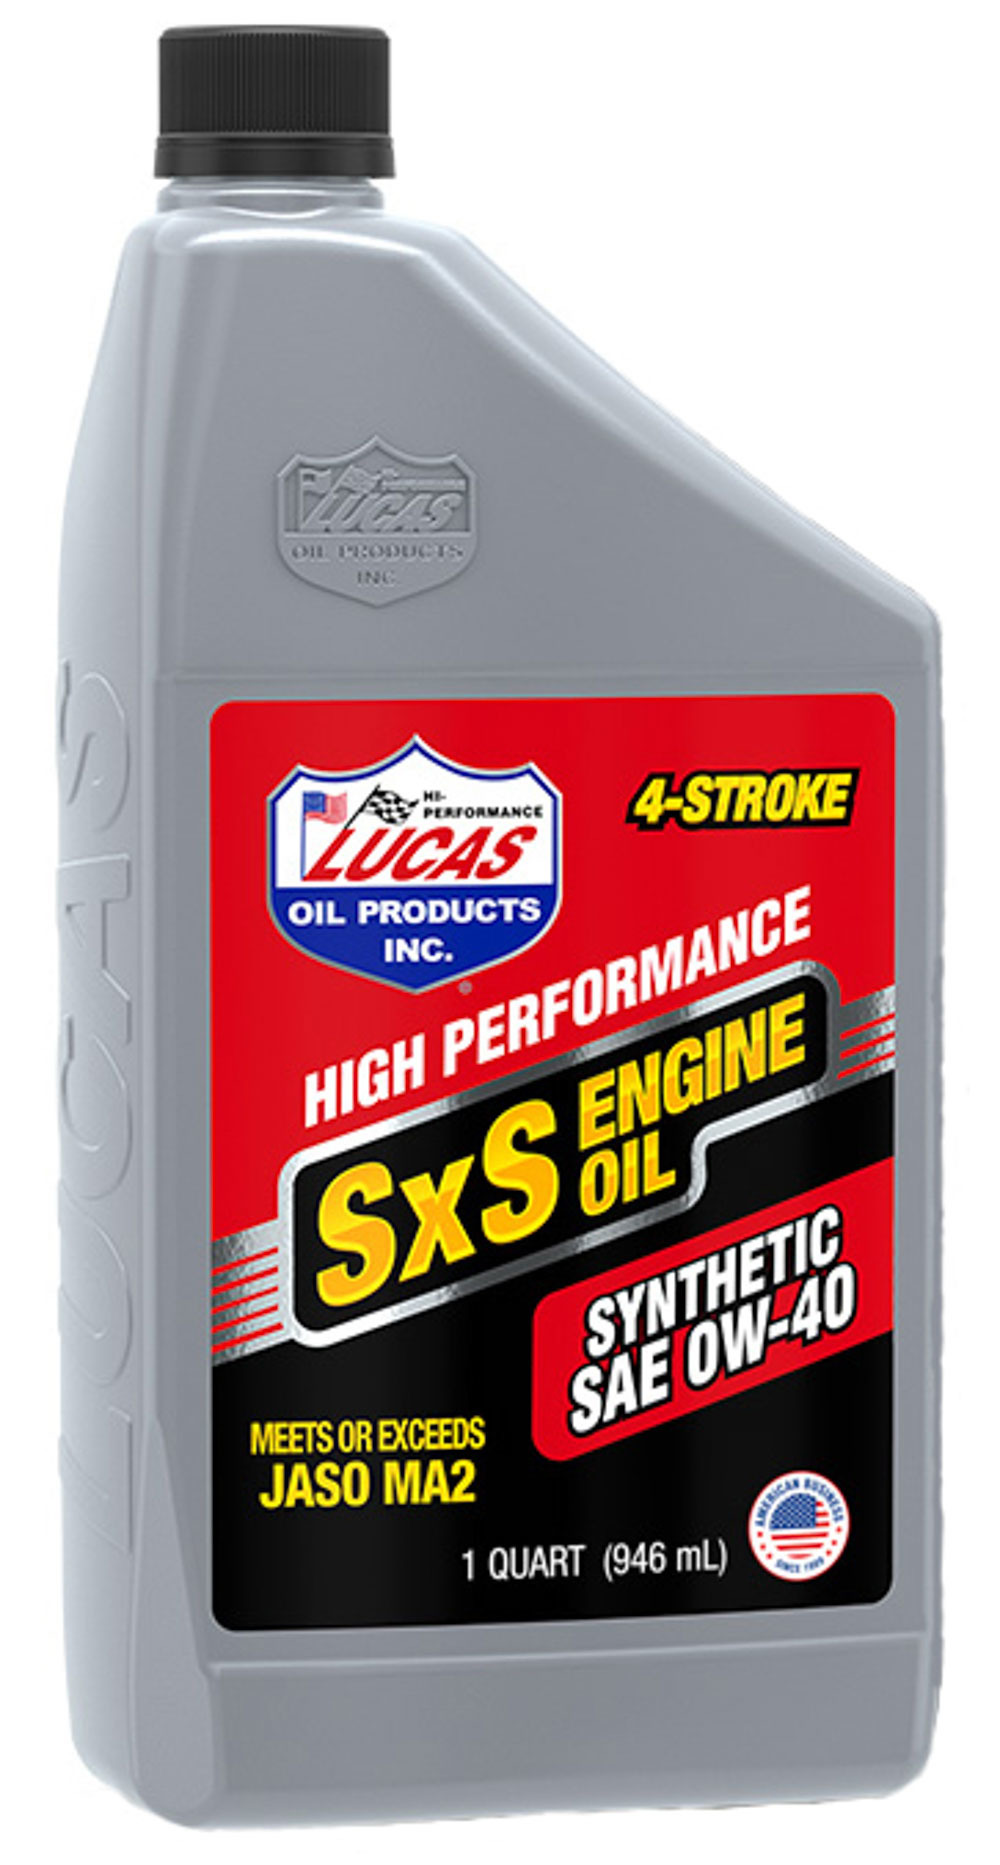 Synthetic 0w40 SXS Oil 1 Quart - 11200